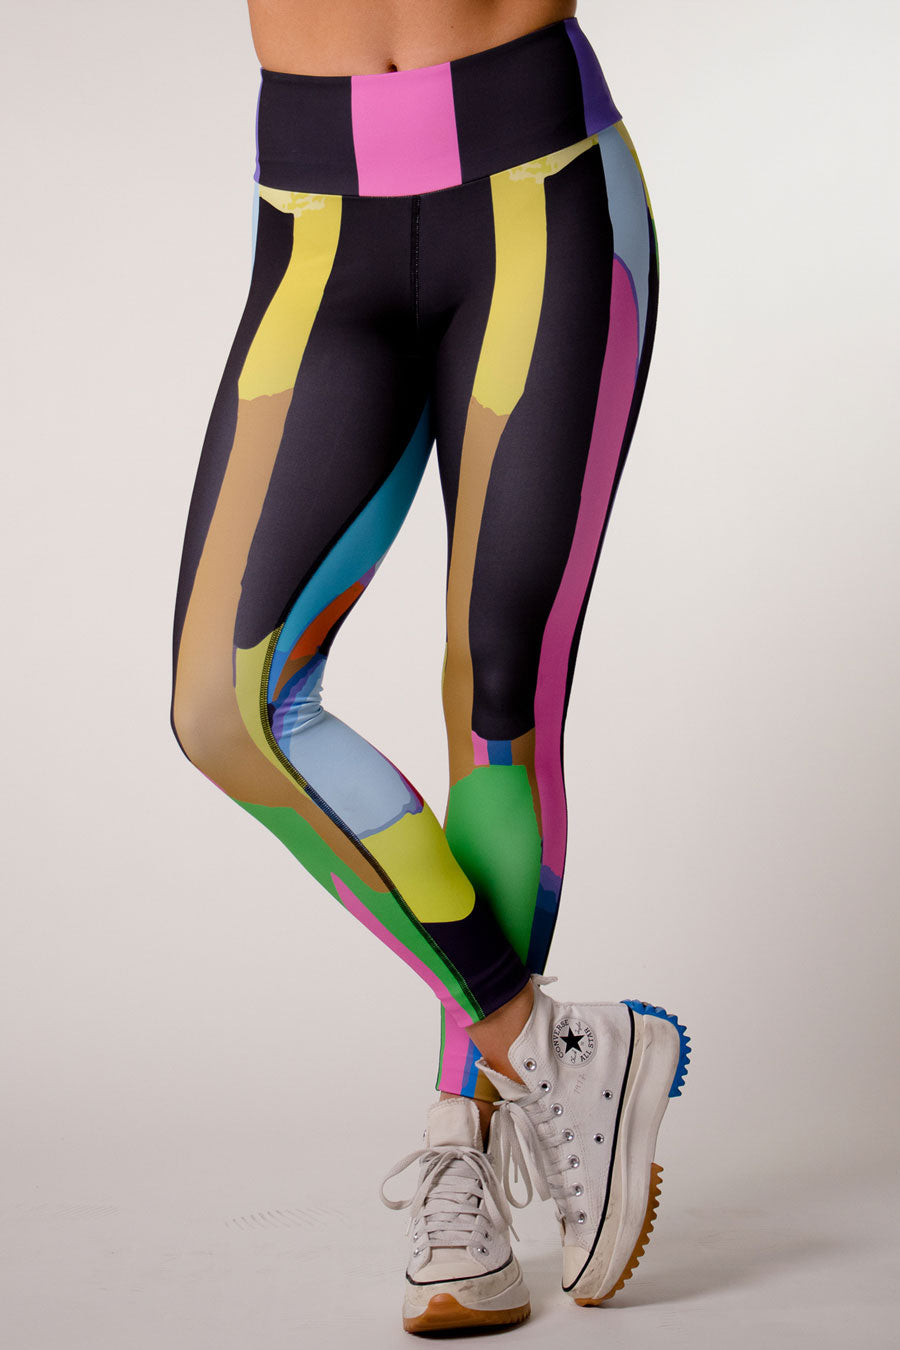 Electro Sport Legging - Women's Workout Leggings